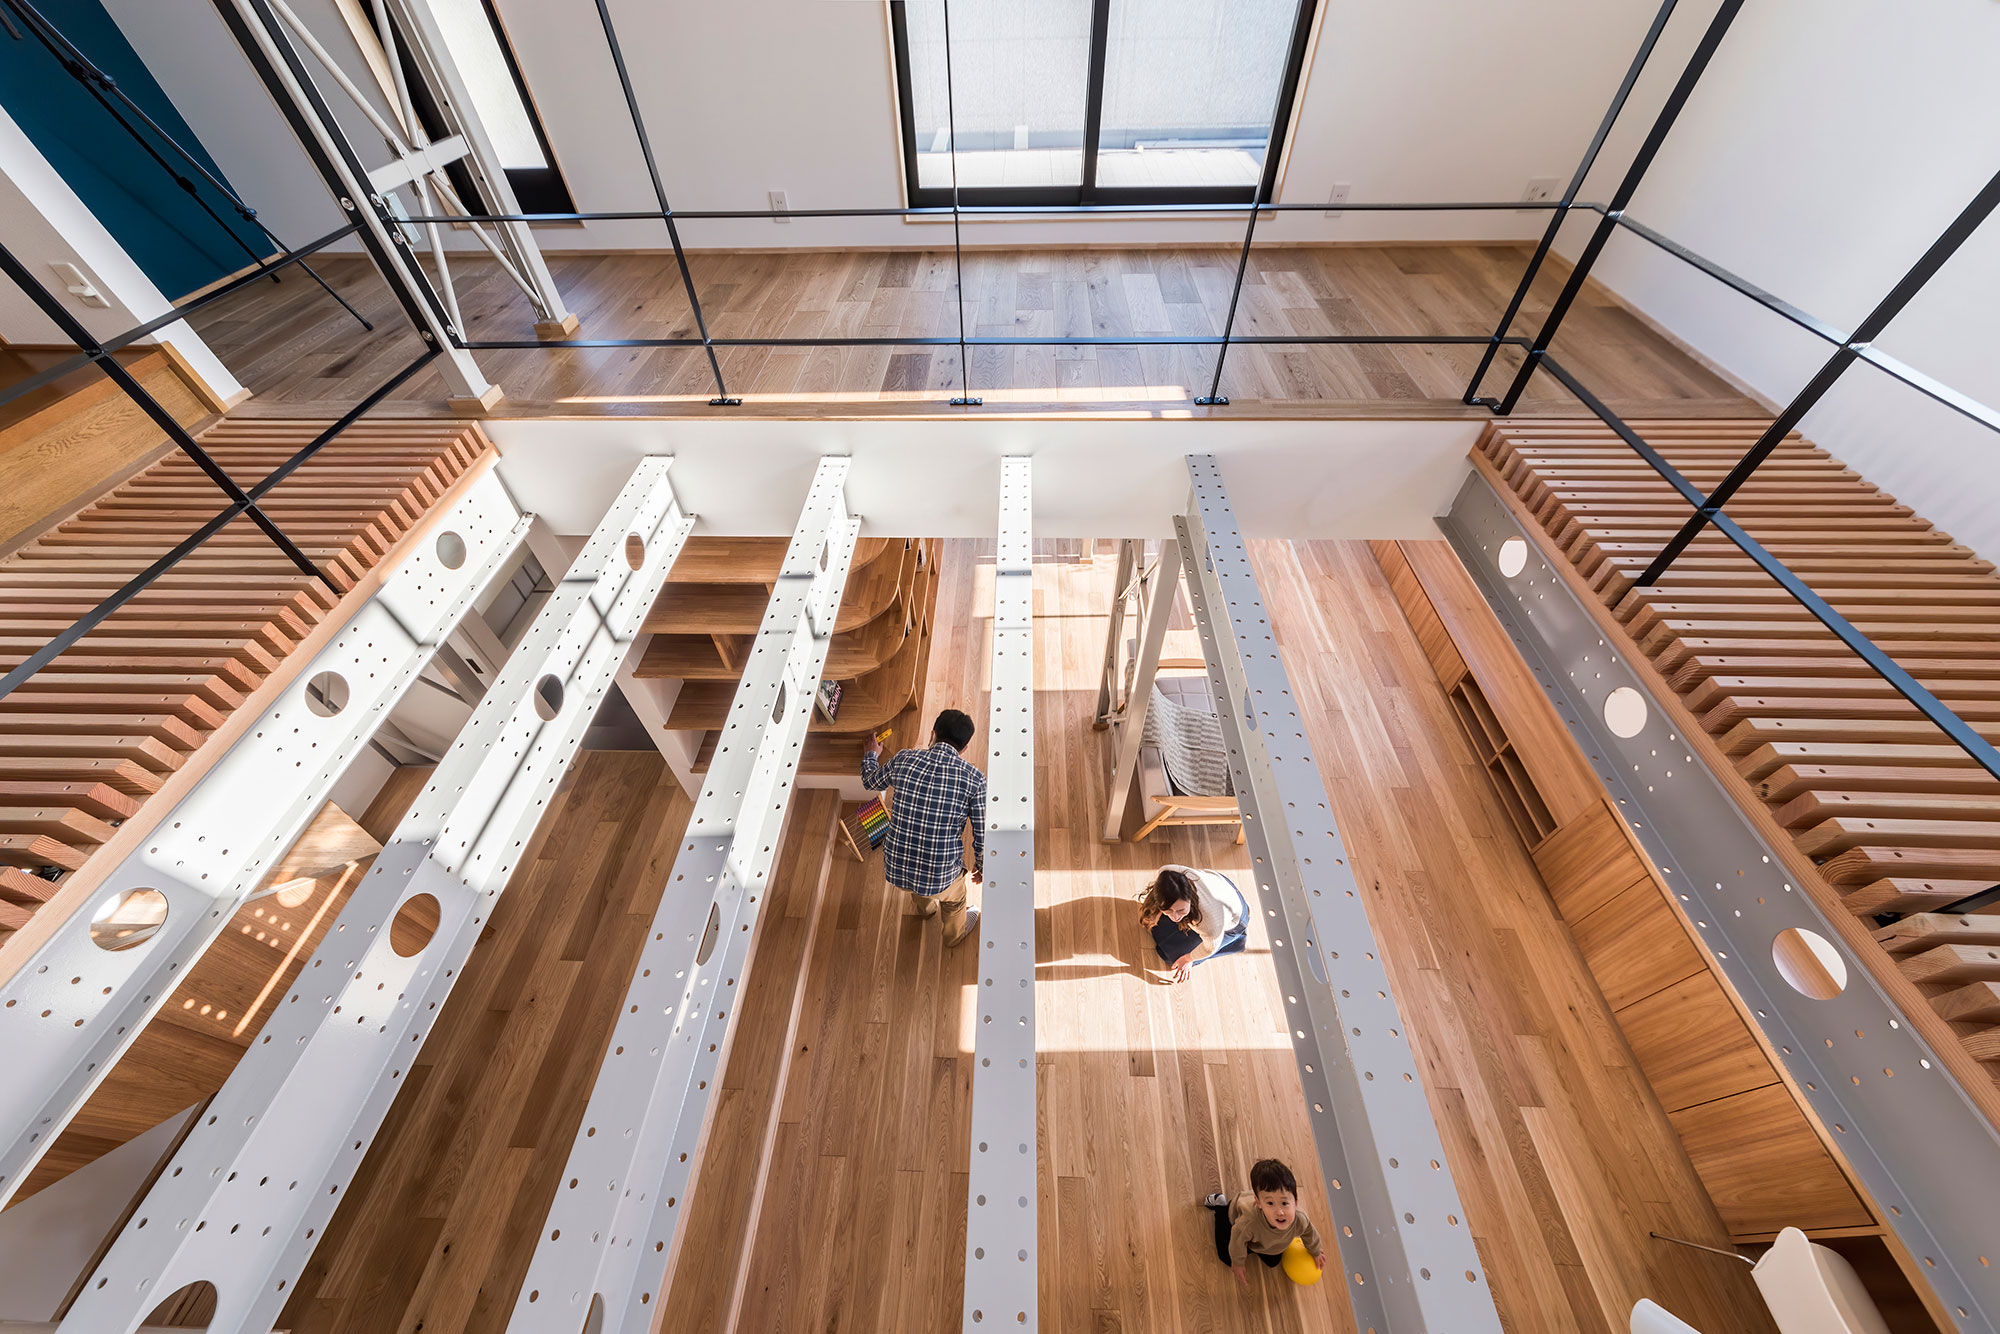 416 Architects 『型式認定のリノベーション』 2021年 戸建住宅リノベーション